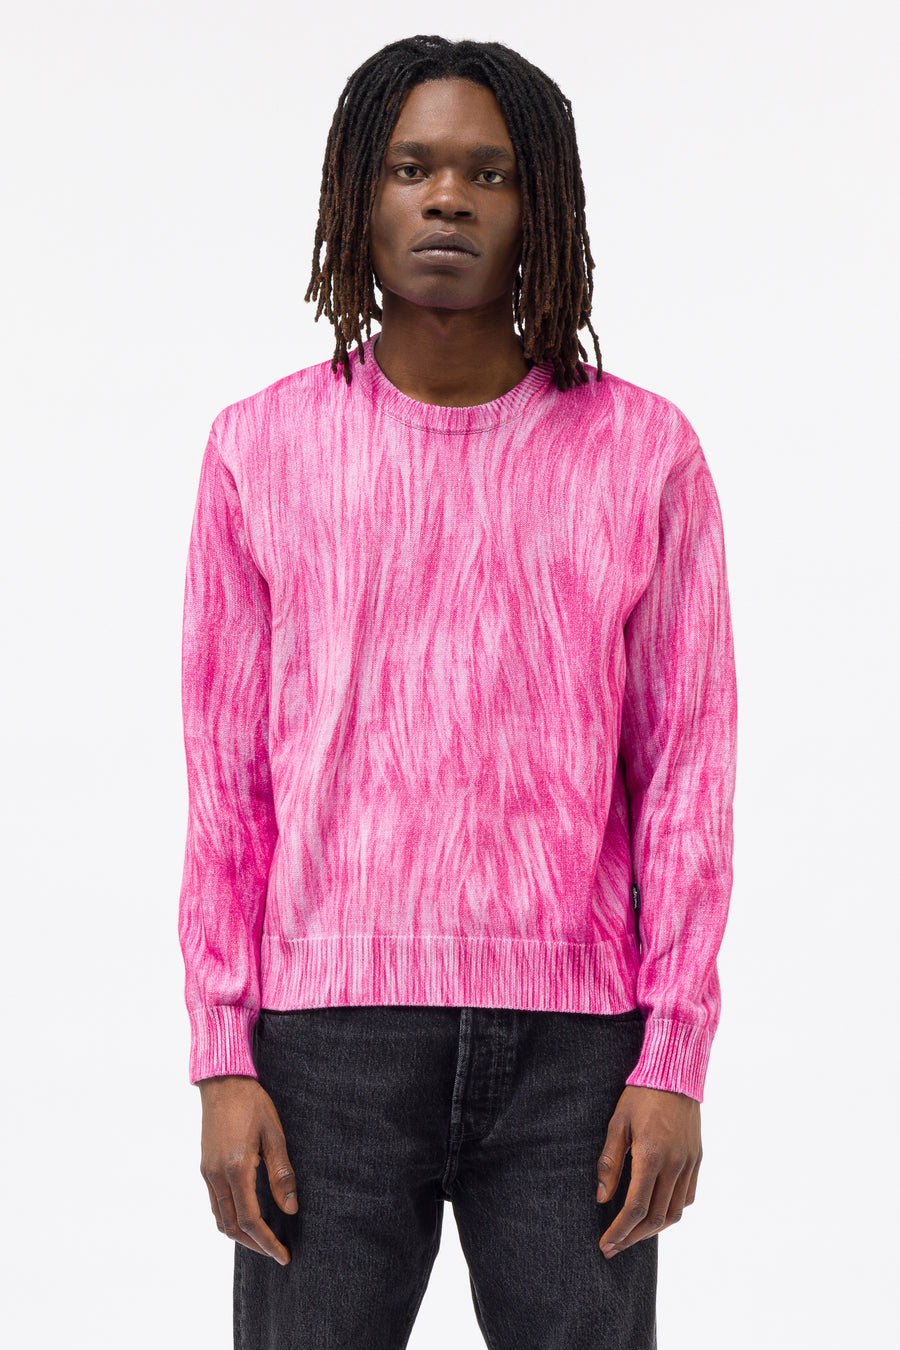 Stüssy - Men's Printed Fur Sweater in Pink - Notre